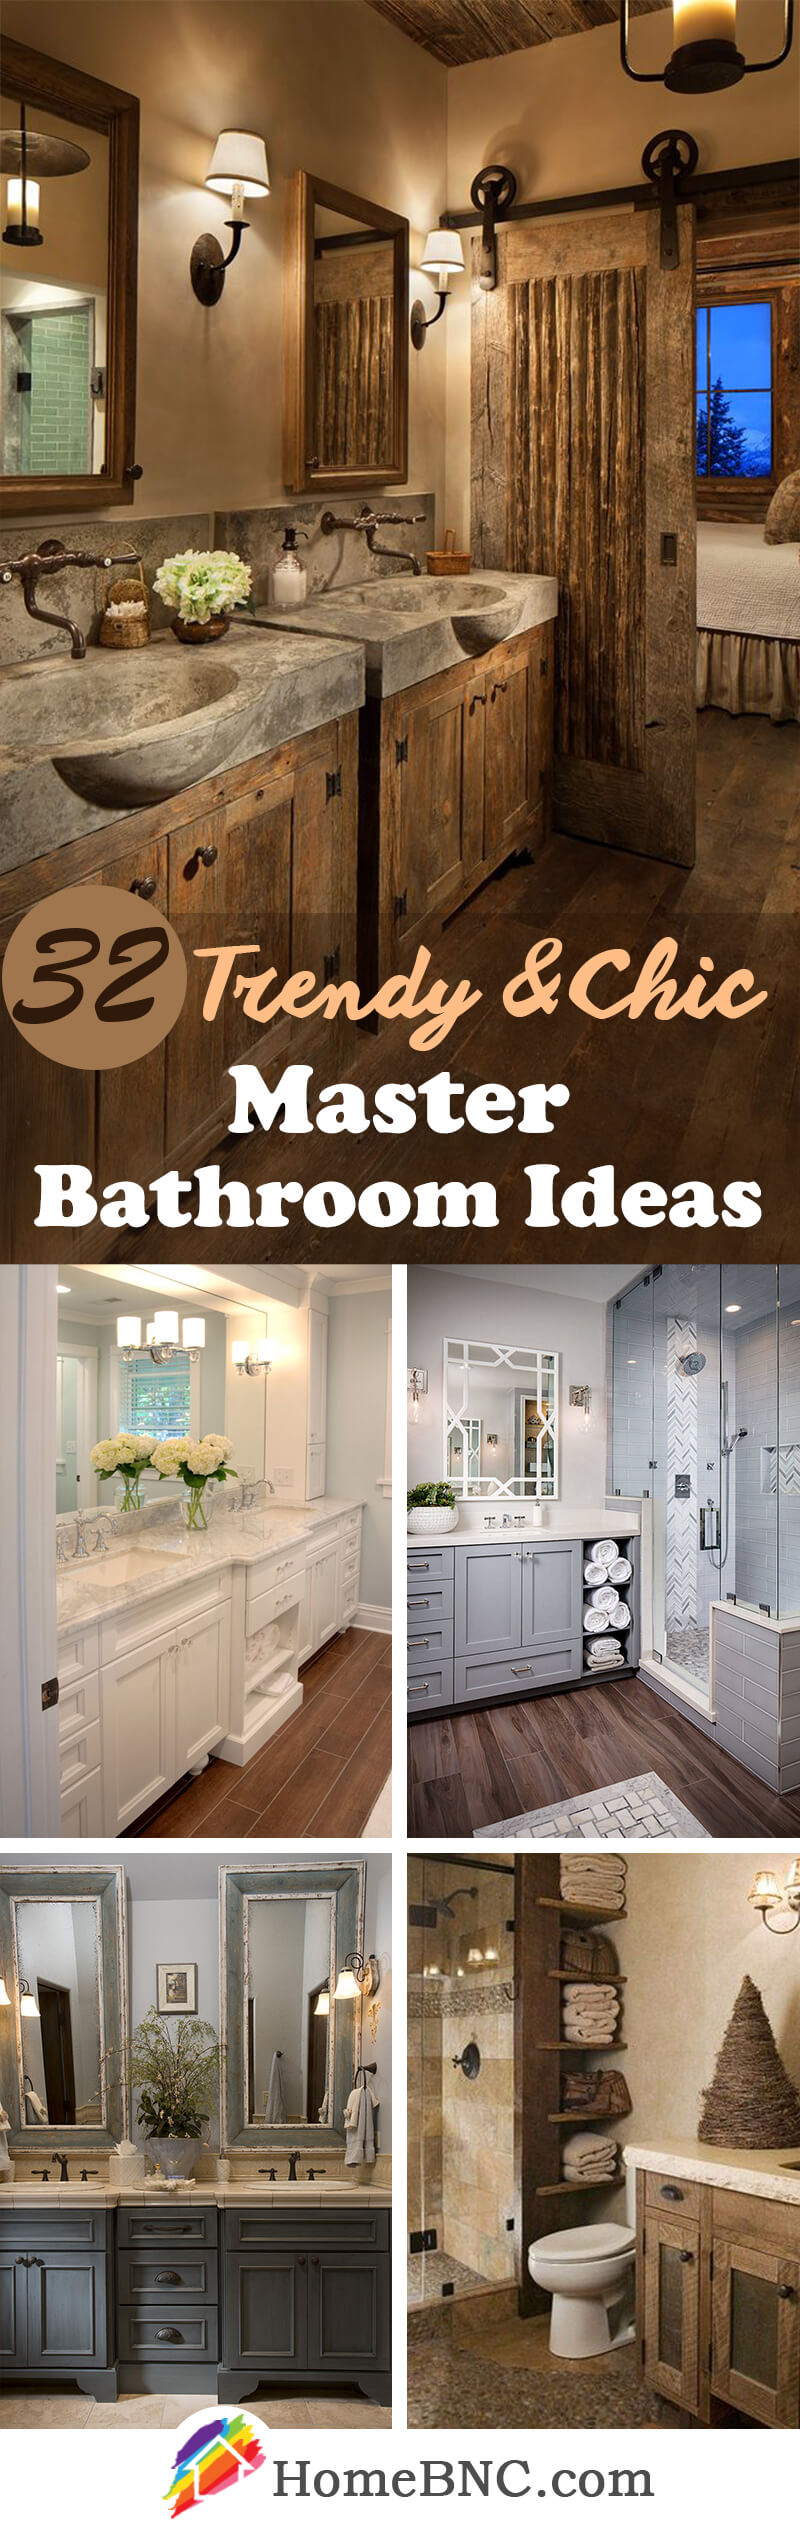 Master Bathroom Decor Ideas